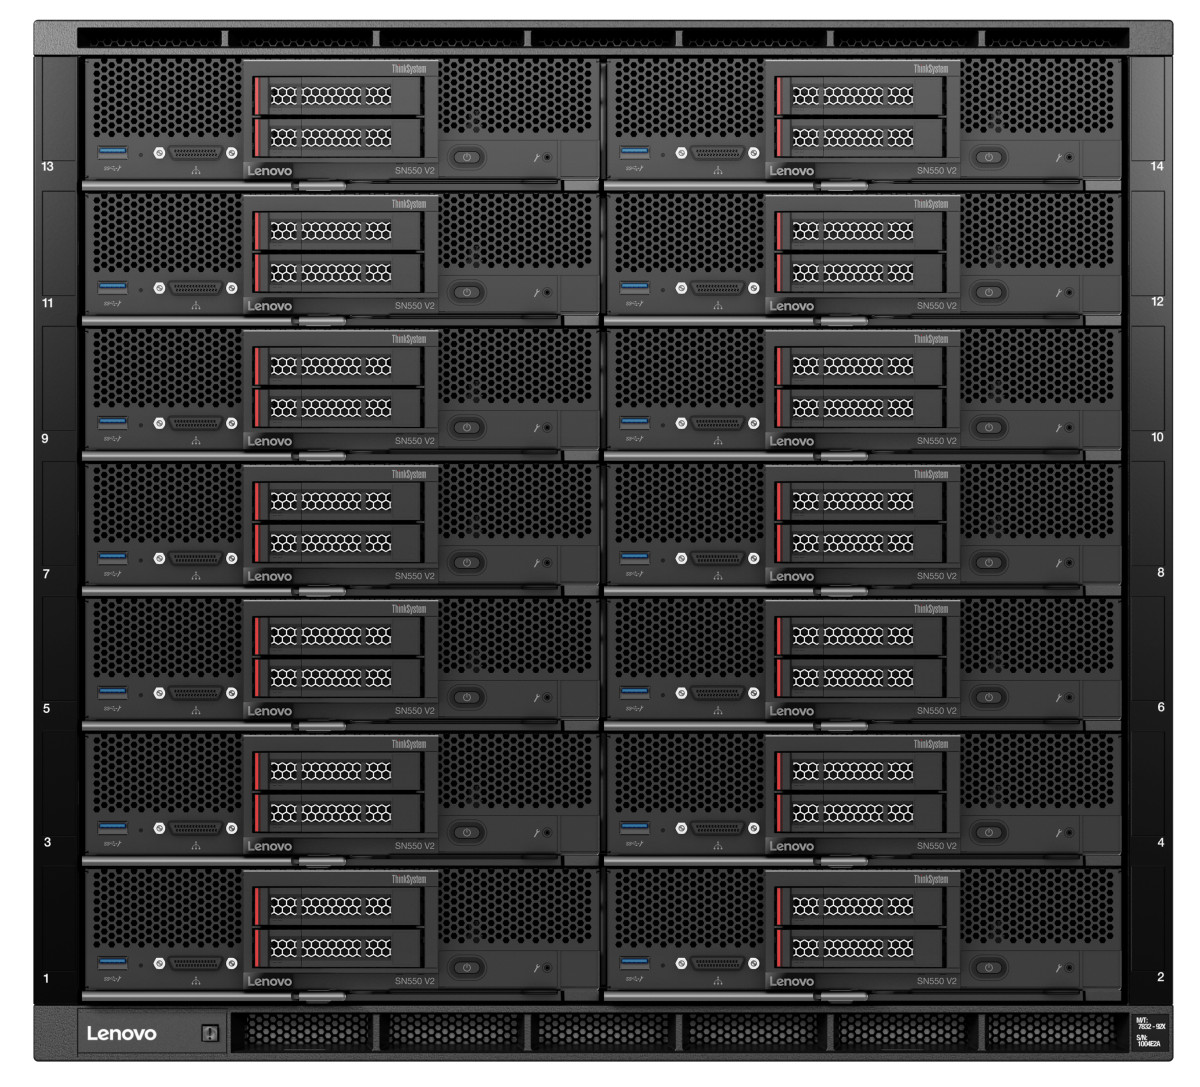 Flex System エンタープライズ・シャーシは、最大 14 台の SN550 V2 コンピュート・ノードを格納でき、高密度環境を実現します。